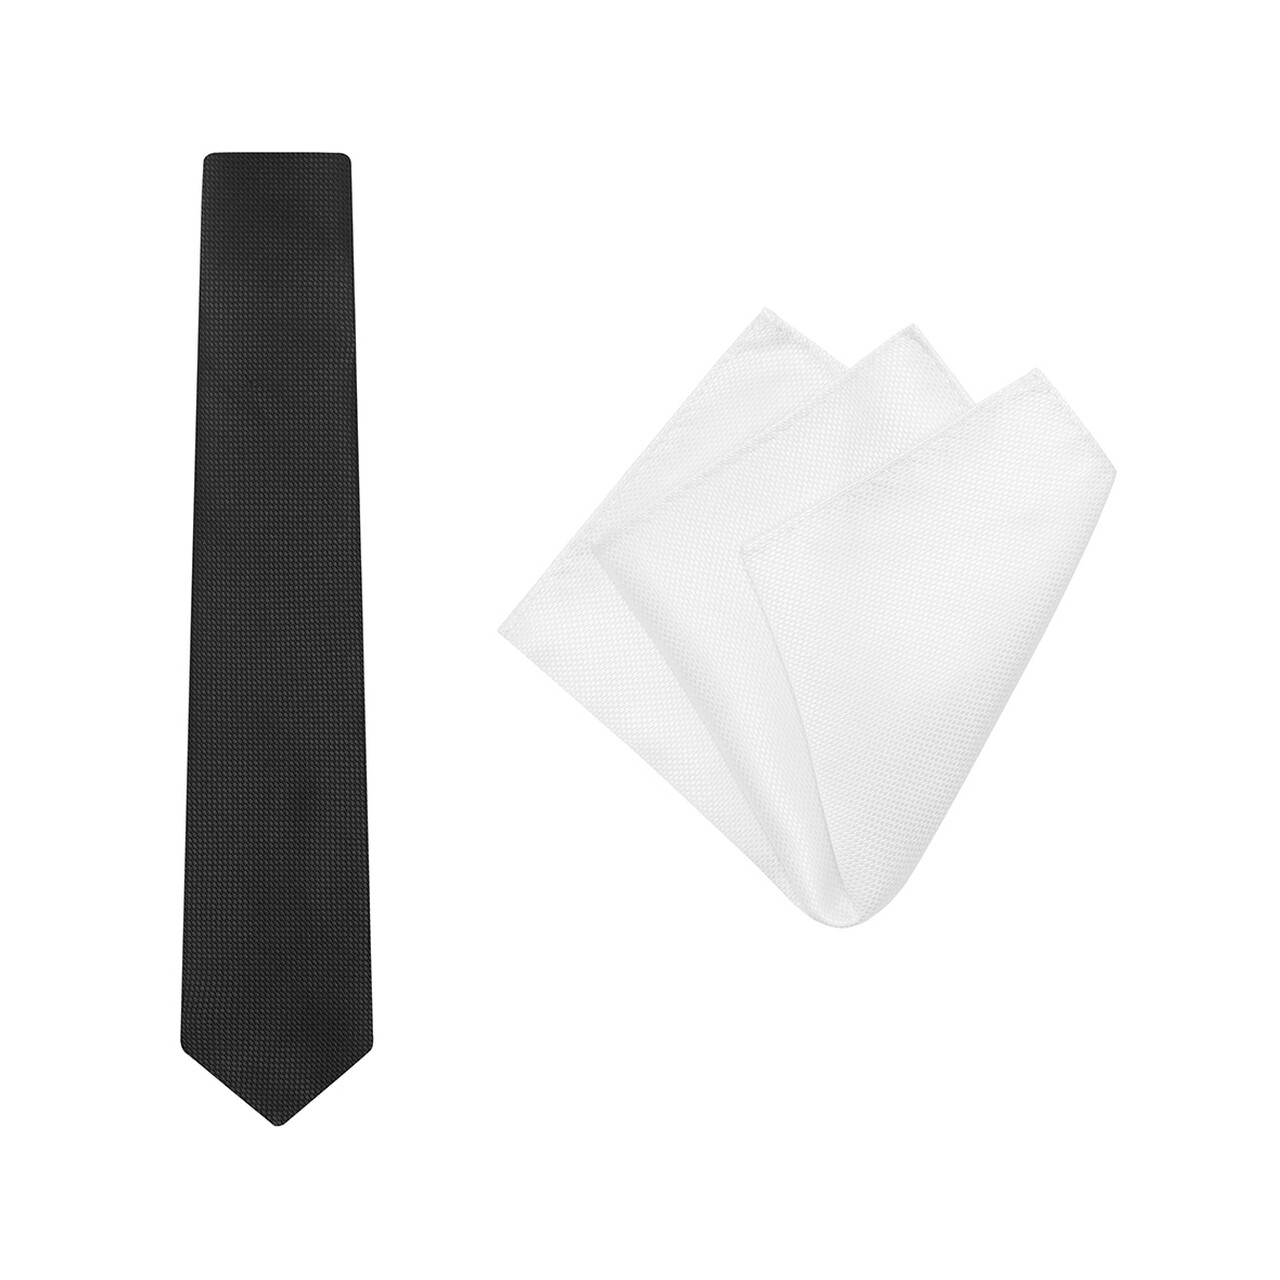 Tie + Pocket Square Set, Wedding, Black/White